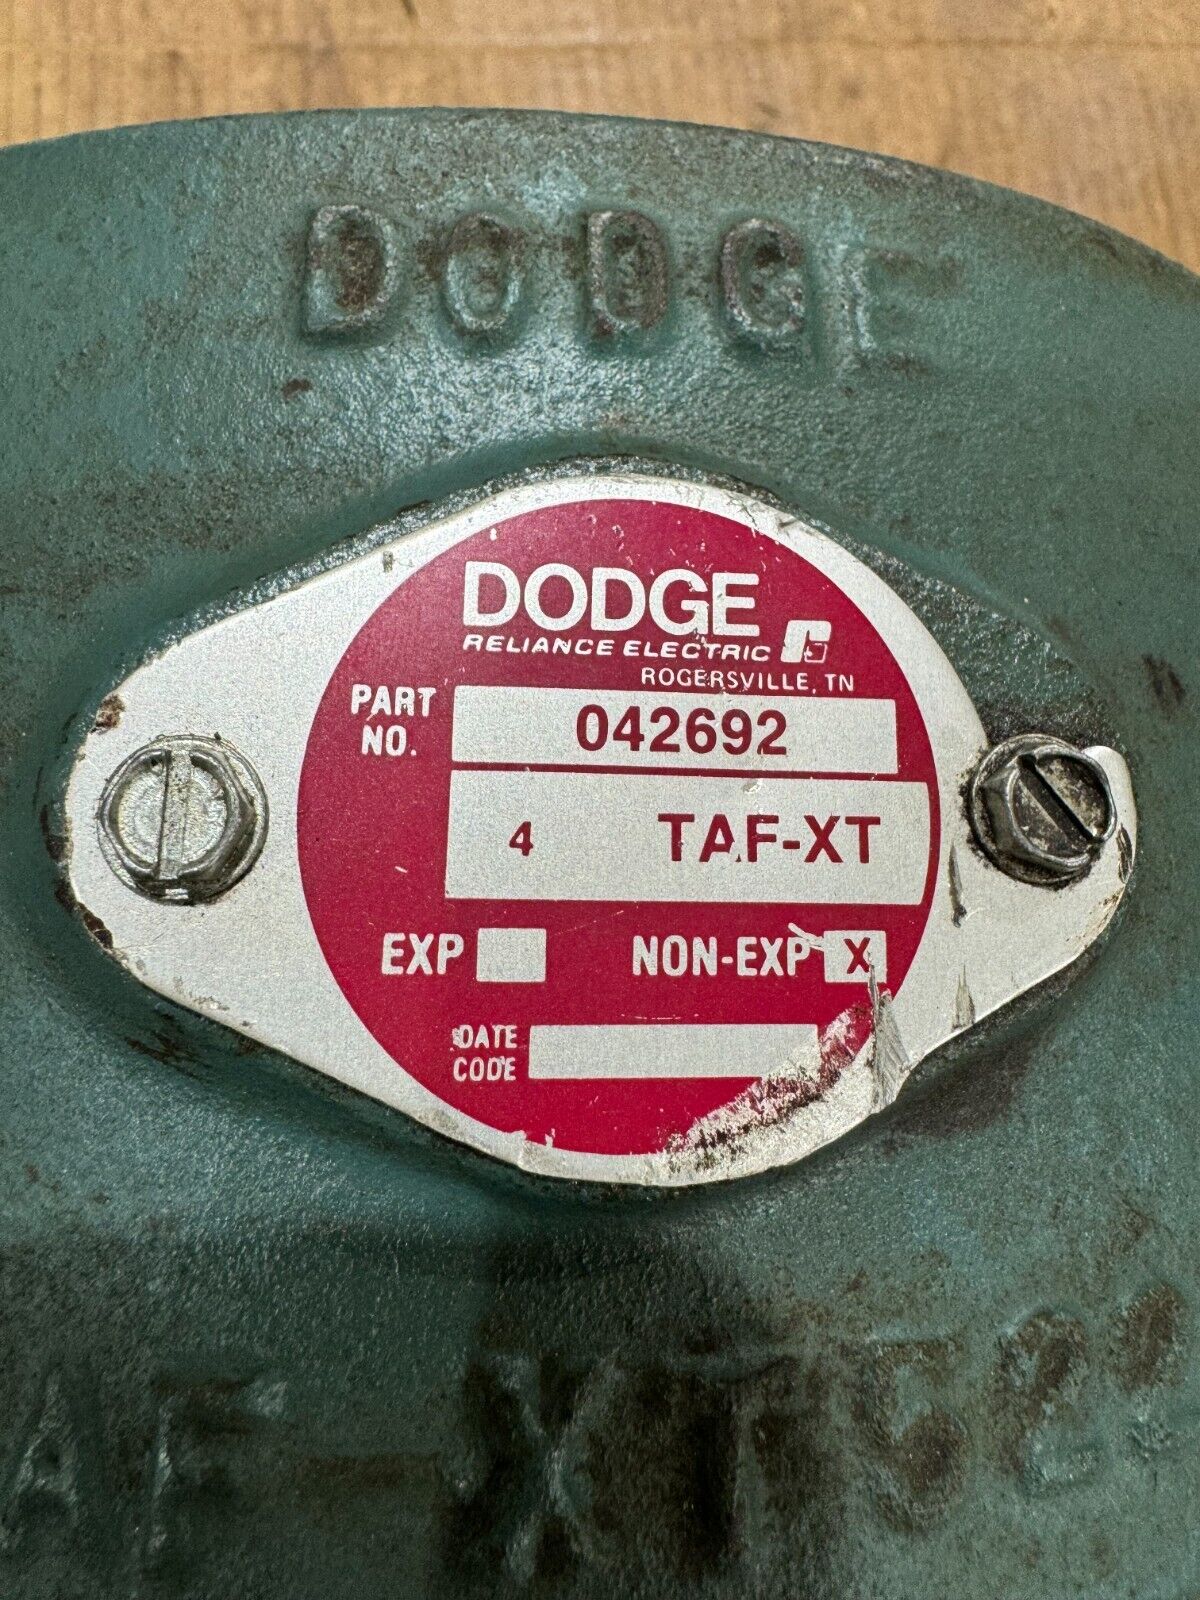 NEW DODGE 4-BOLT TAF-XT522 PILLOW BLOCK BEARING 4" BORE NON-EXPANSION 042692